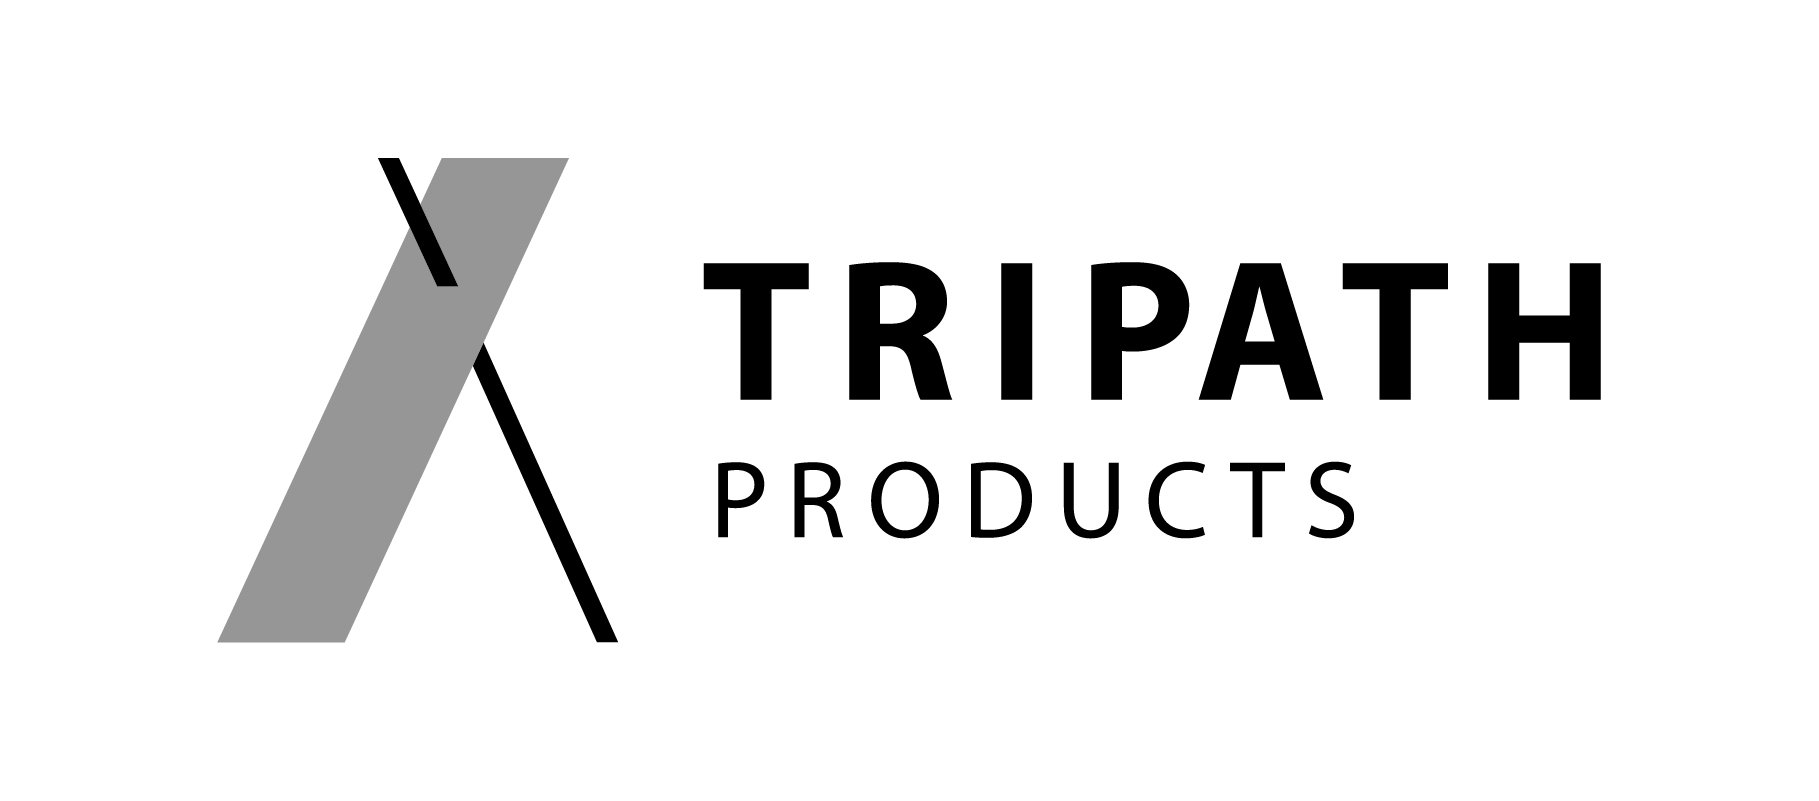 TRIPATH PRODUCTS